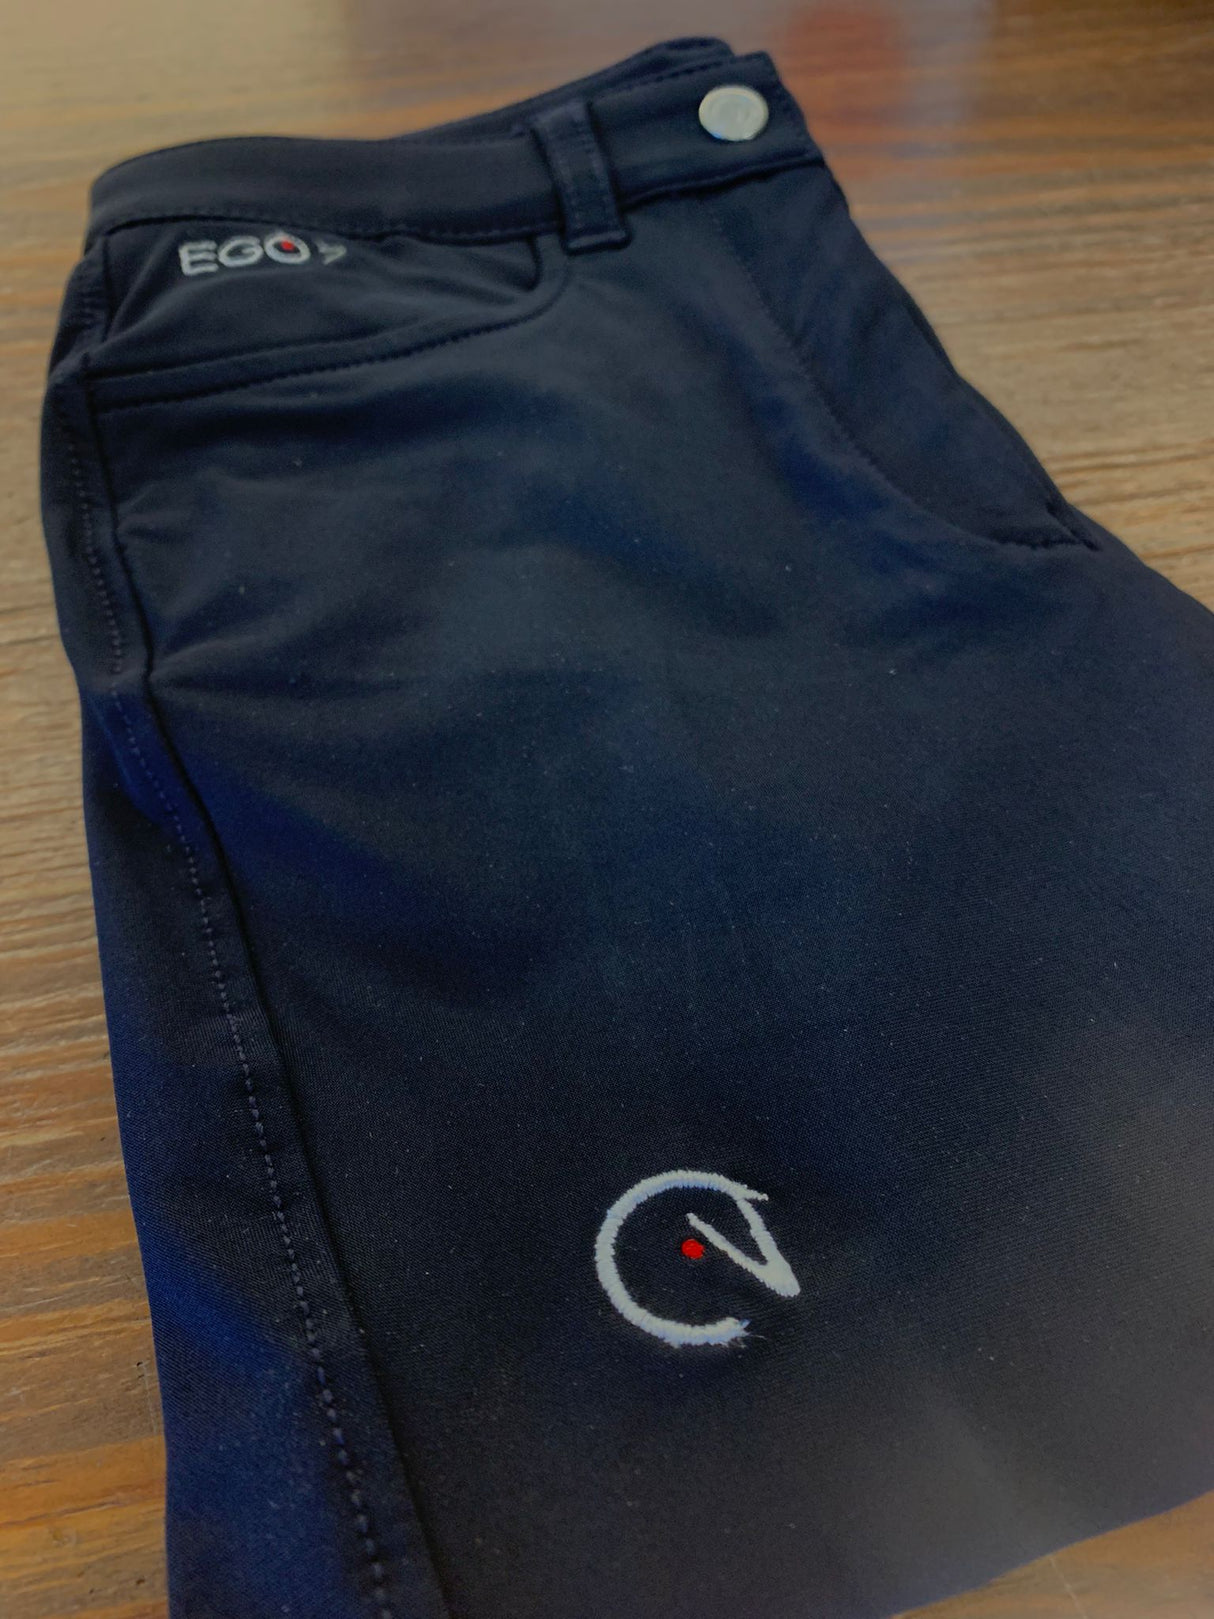 Pantalone Jumping Ego7 Bambino modello EJ-KI Junior Blu